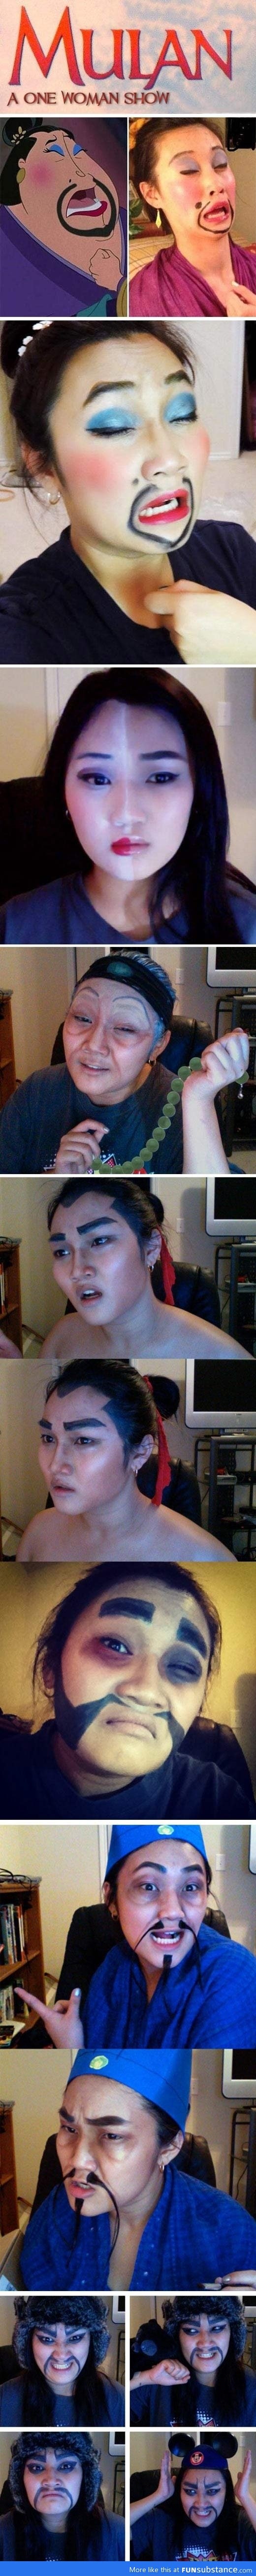 Mulan and the wonders of makeup